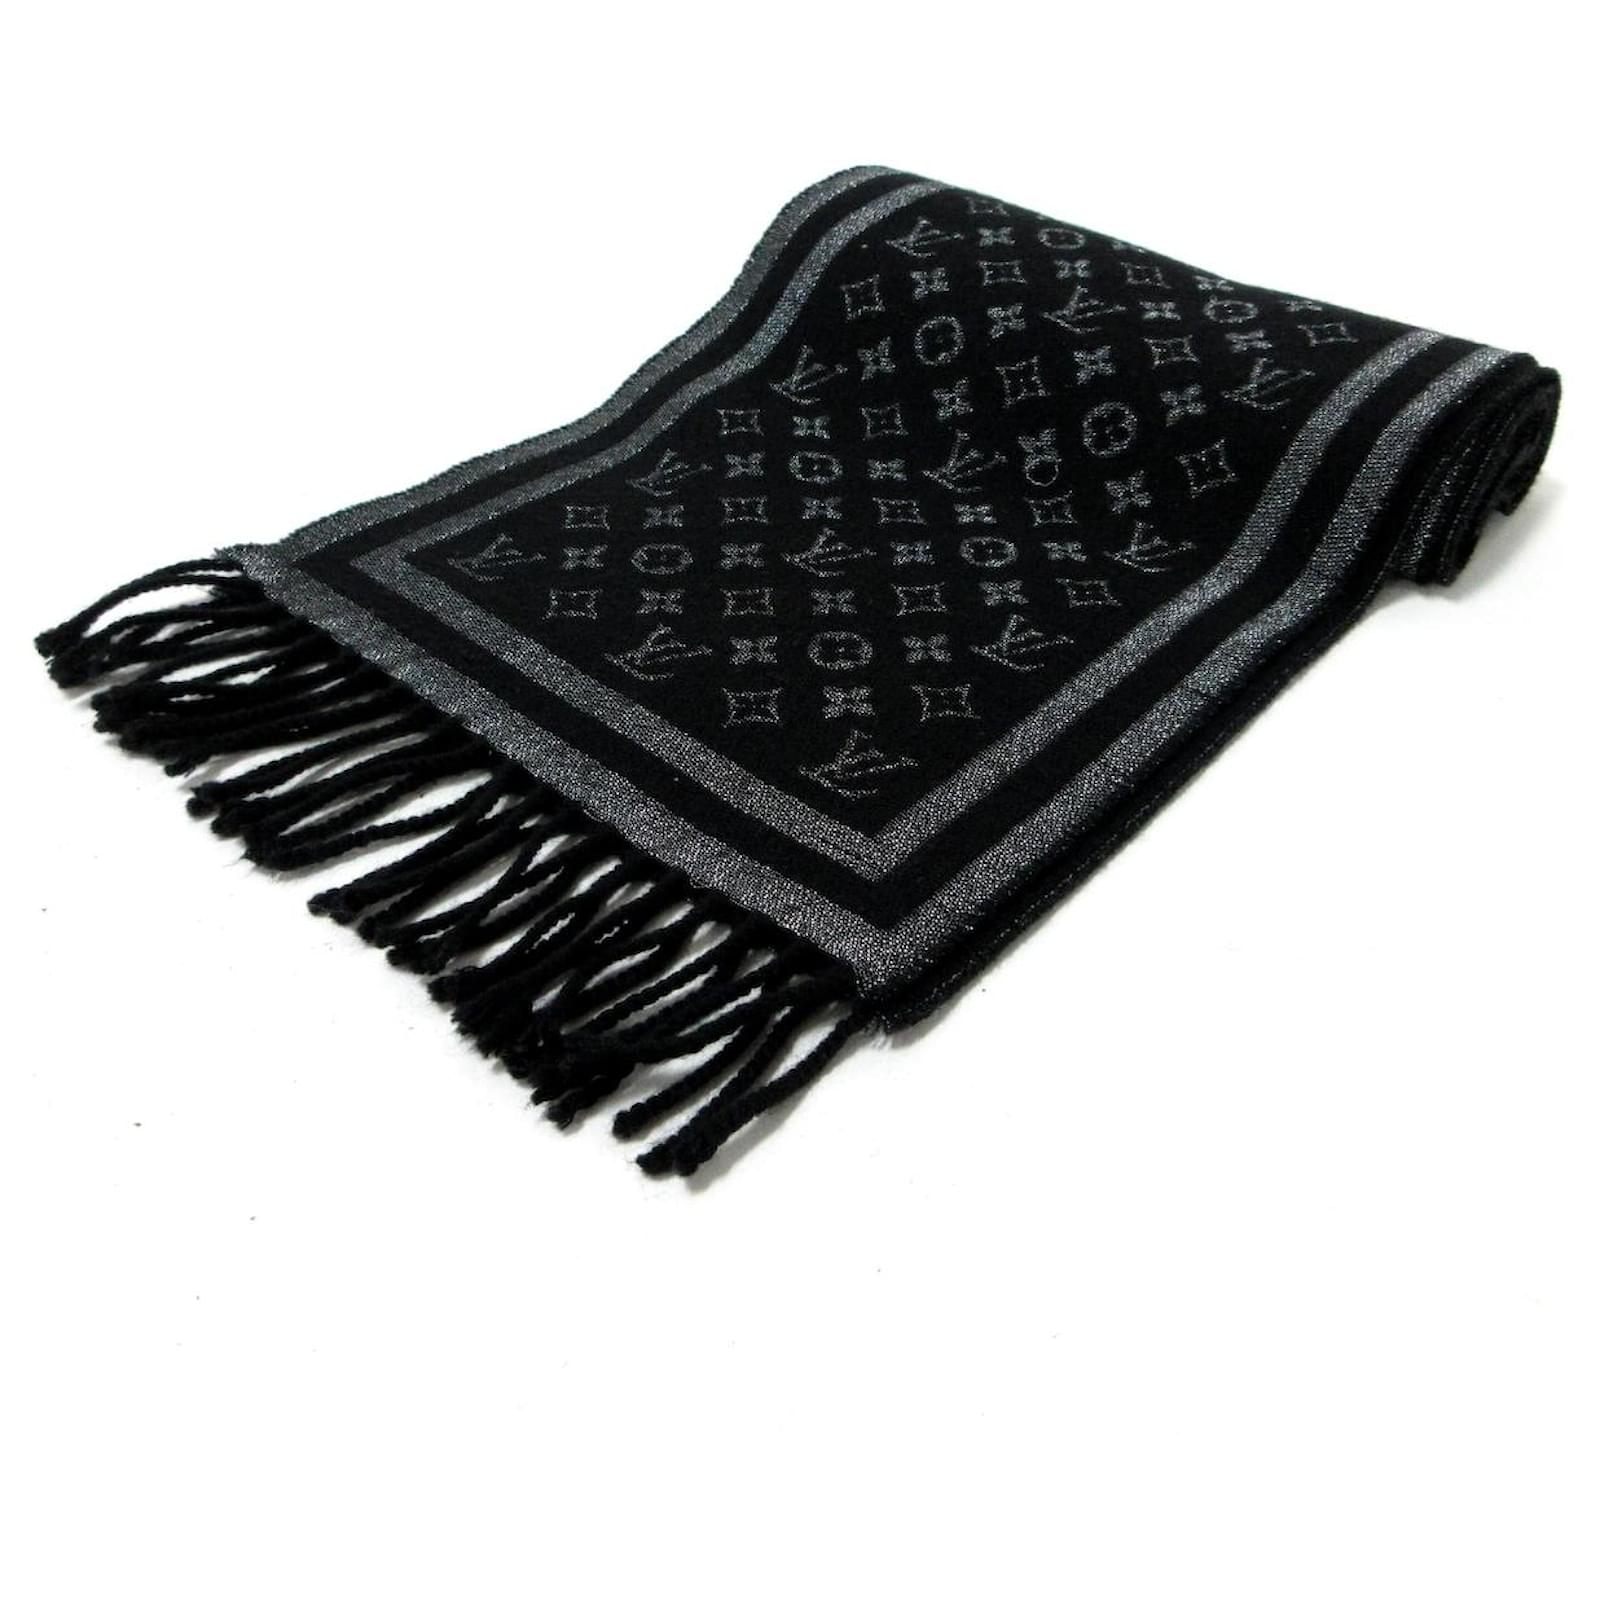 vuitton black scarf men